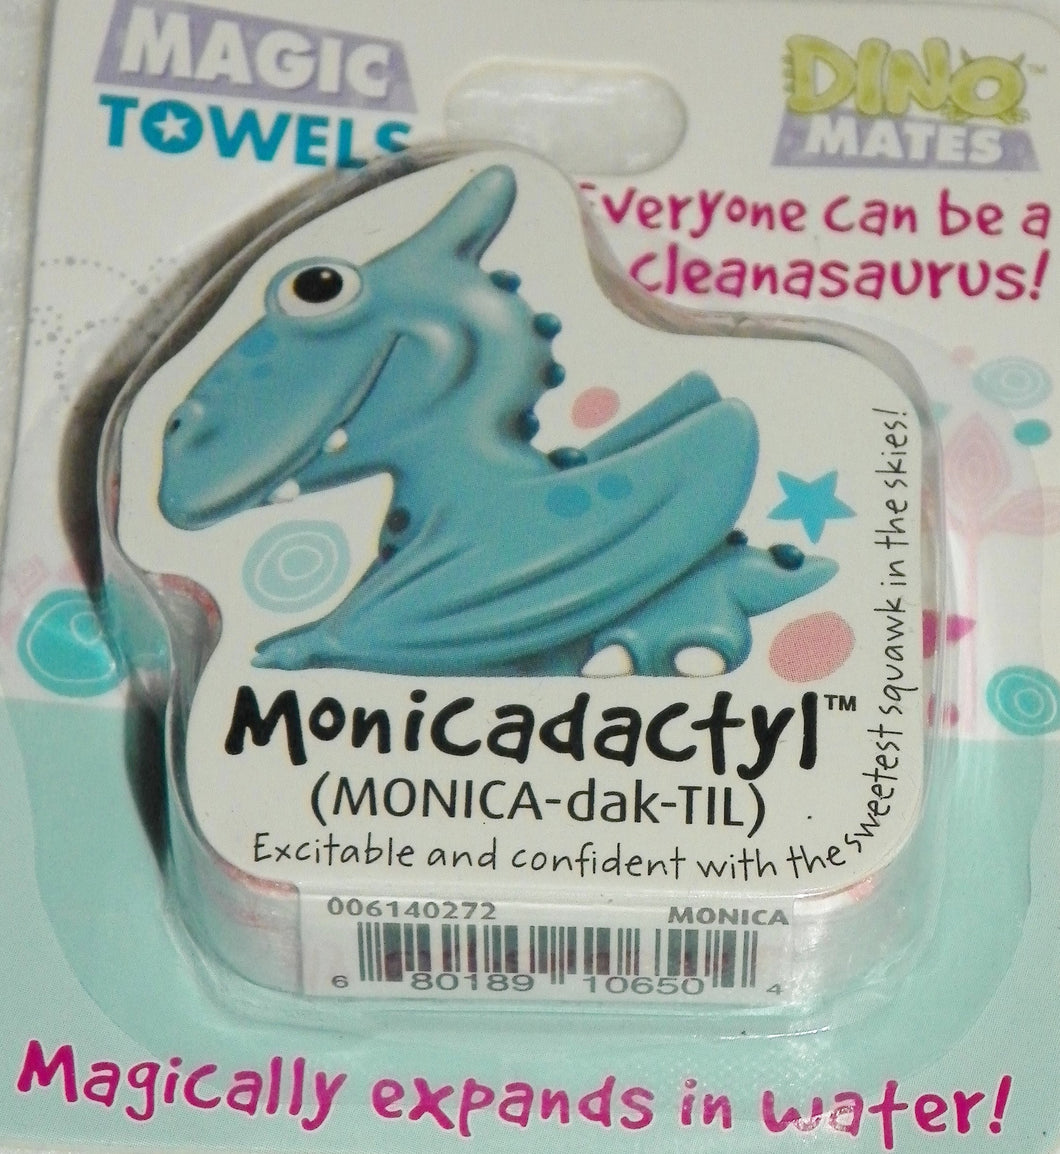 Dinomatic Magic Towel-Monicadactyl